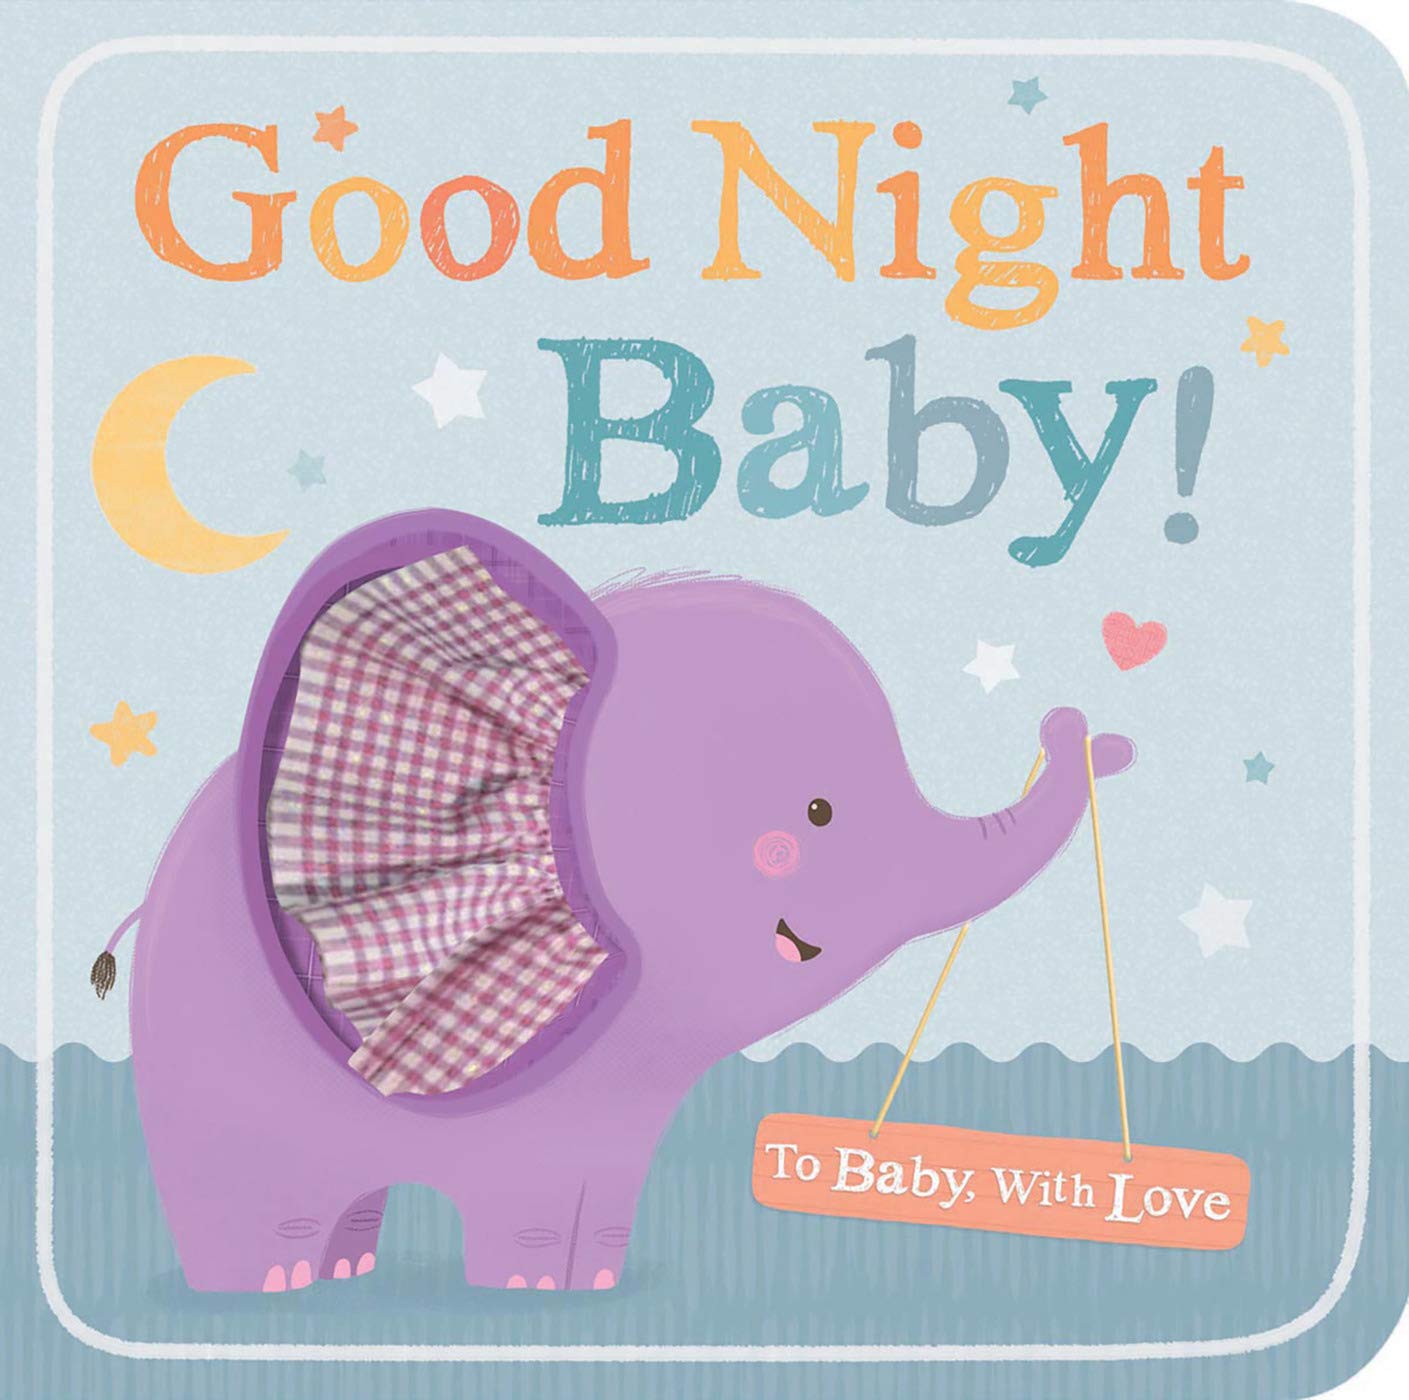 Ms. Bianca: Good Night Baby! by Sarah Ward. https://www.tysonscornerchildre...